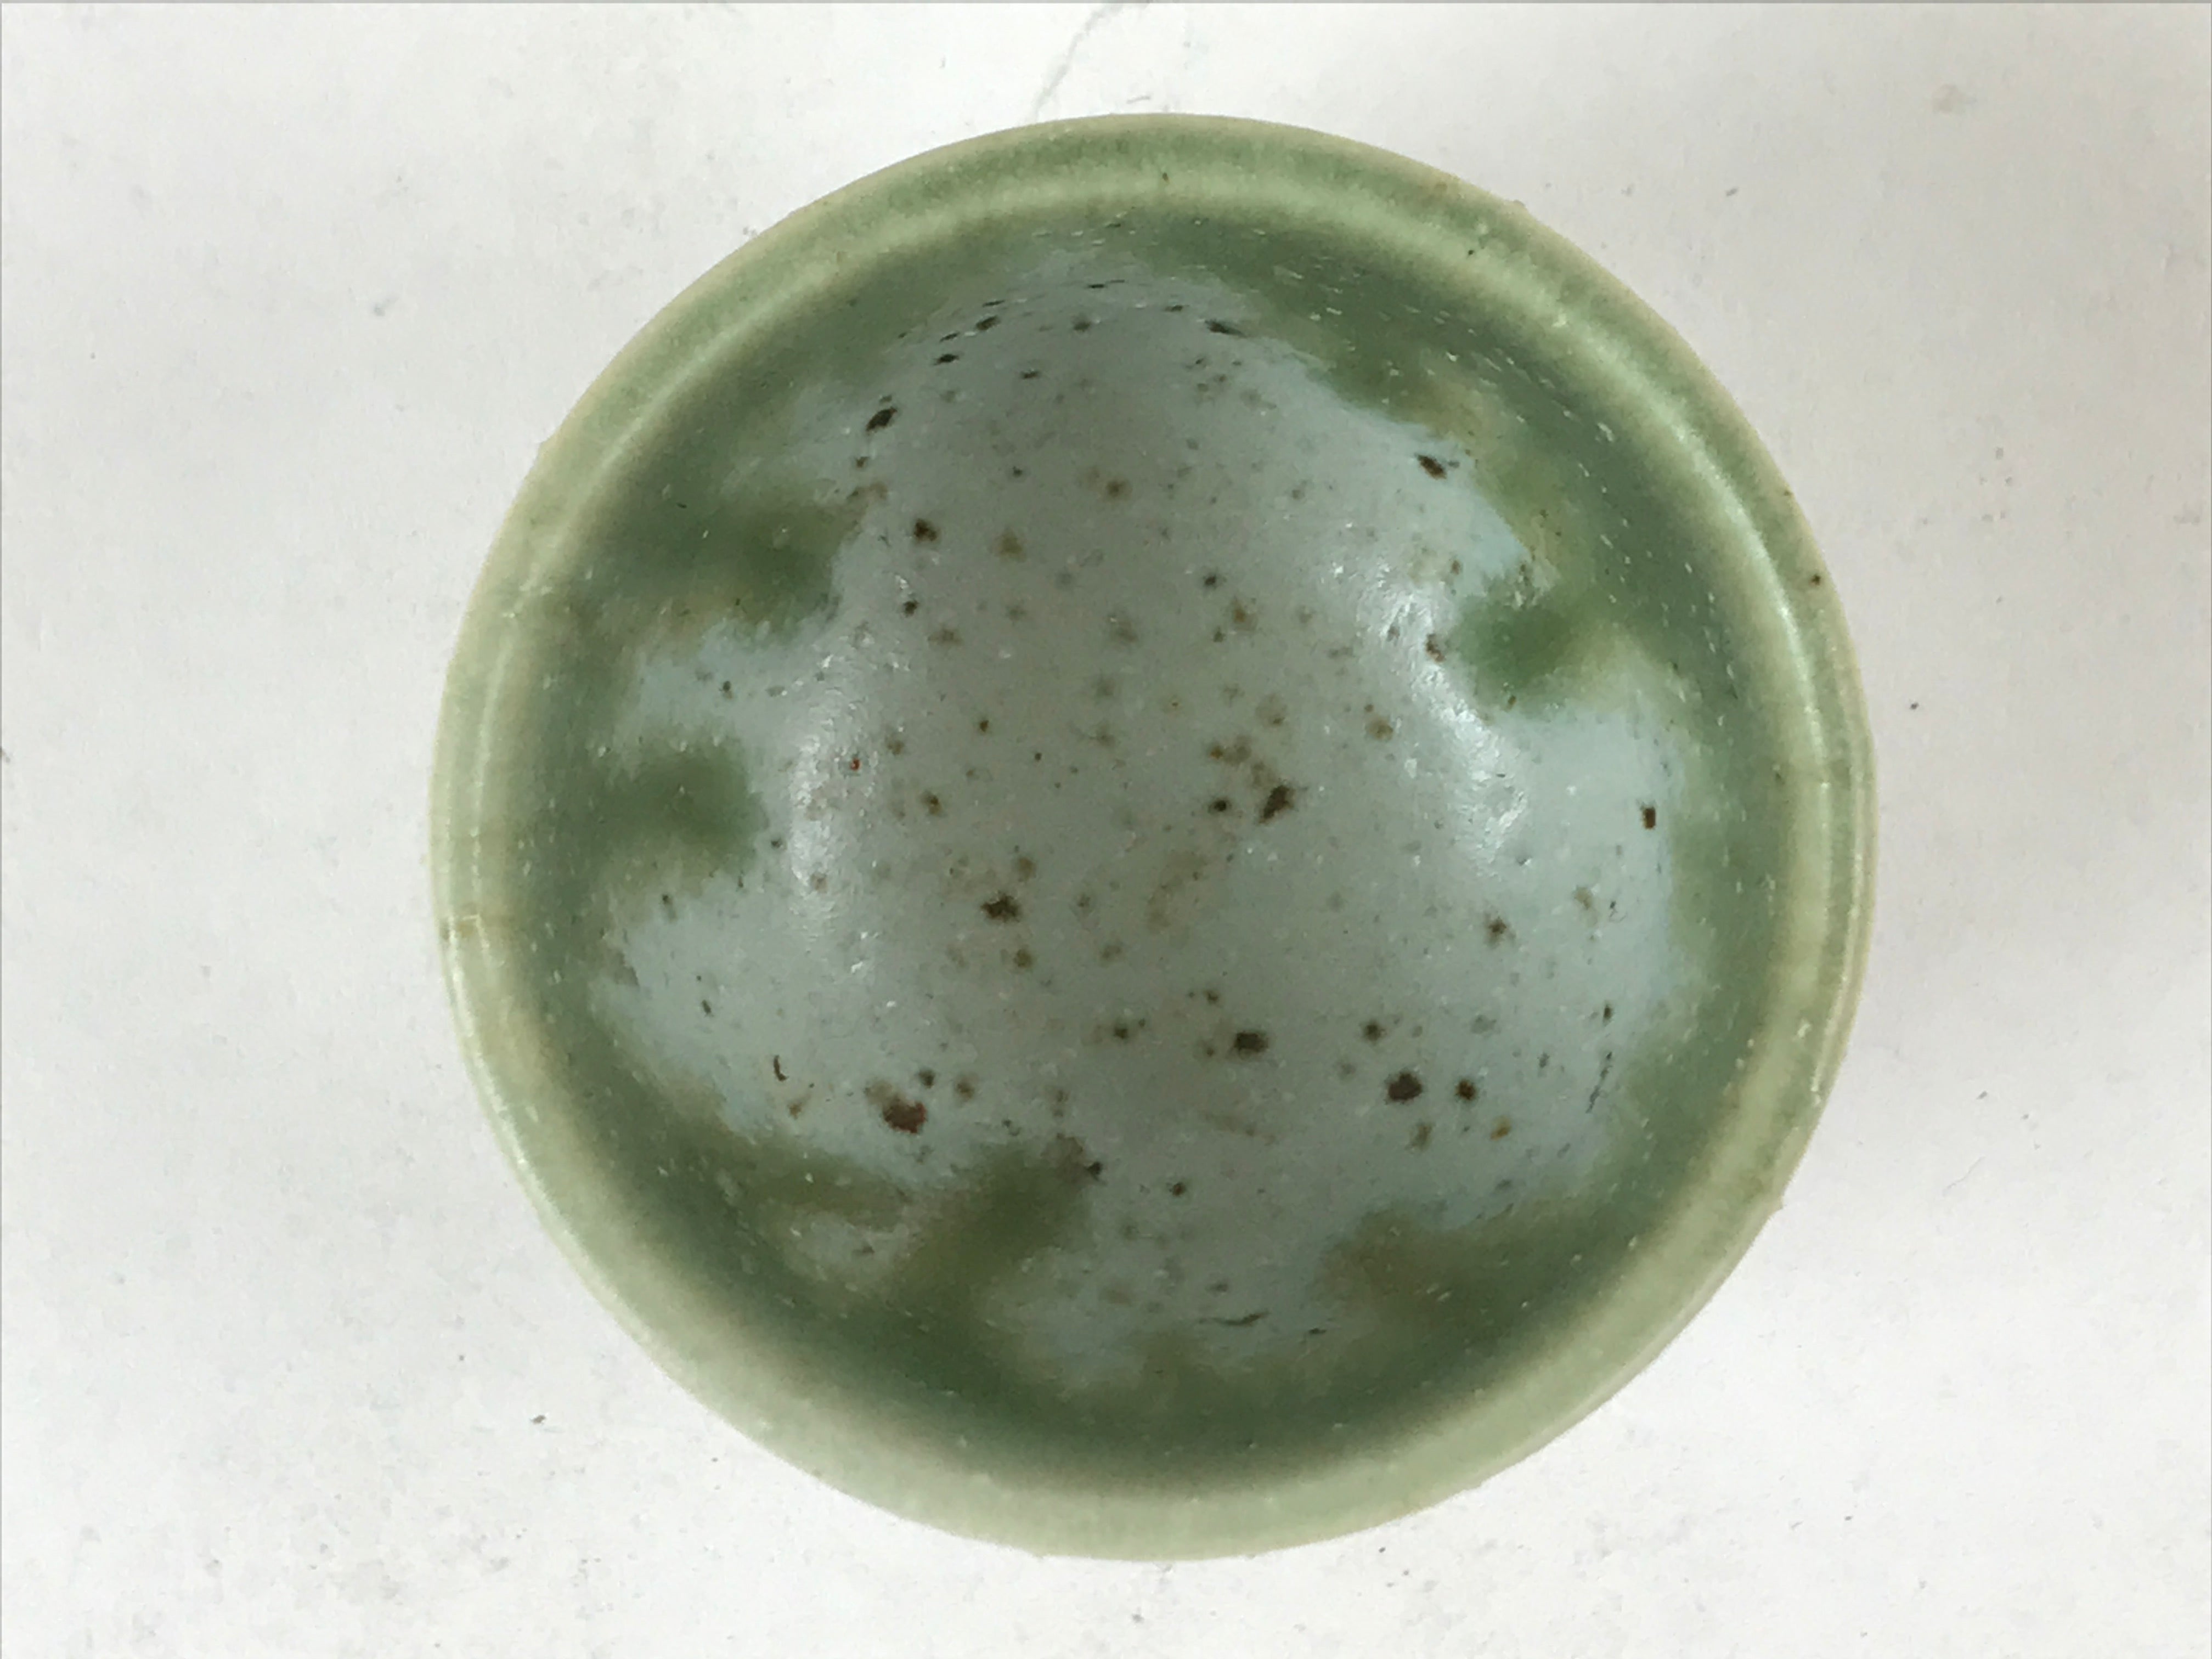 Japanese Ceramic Sake Cup Vtg Tsubomi Guinomi Green Mint Brown Speckle G125